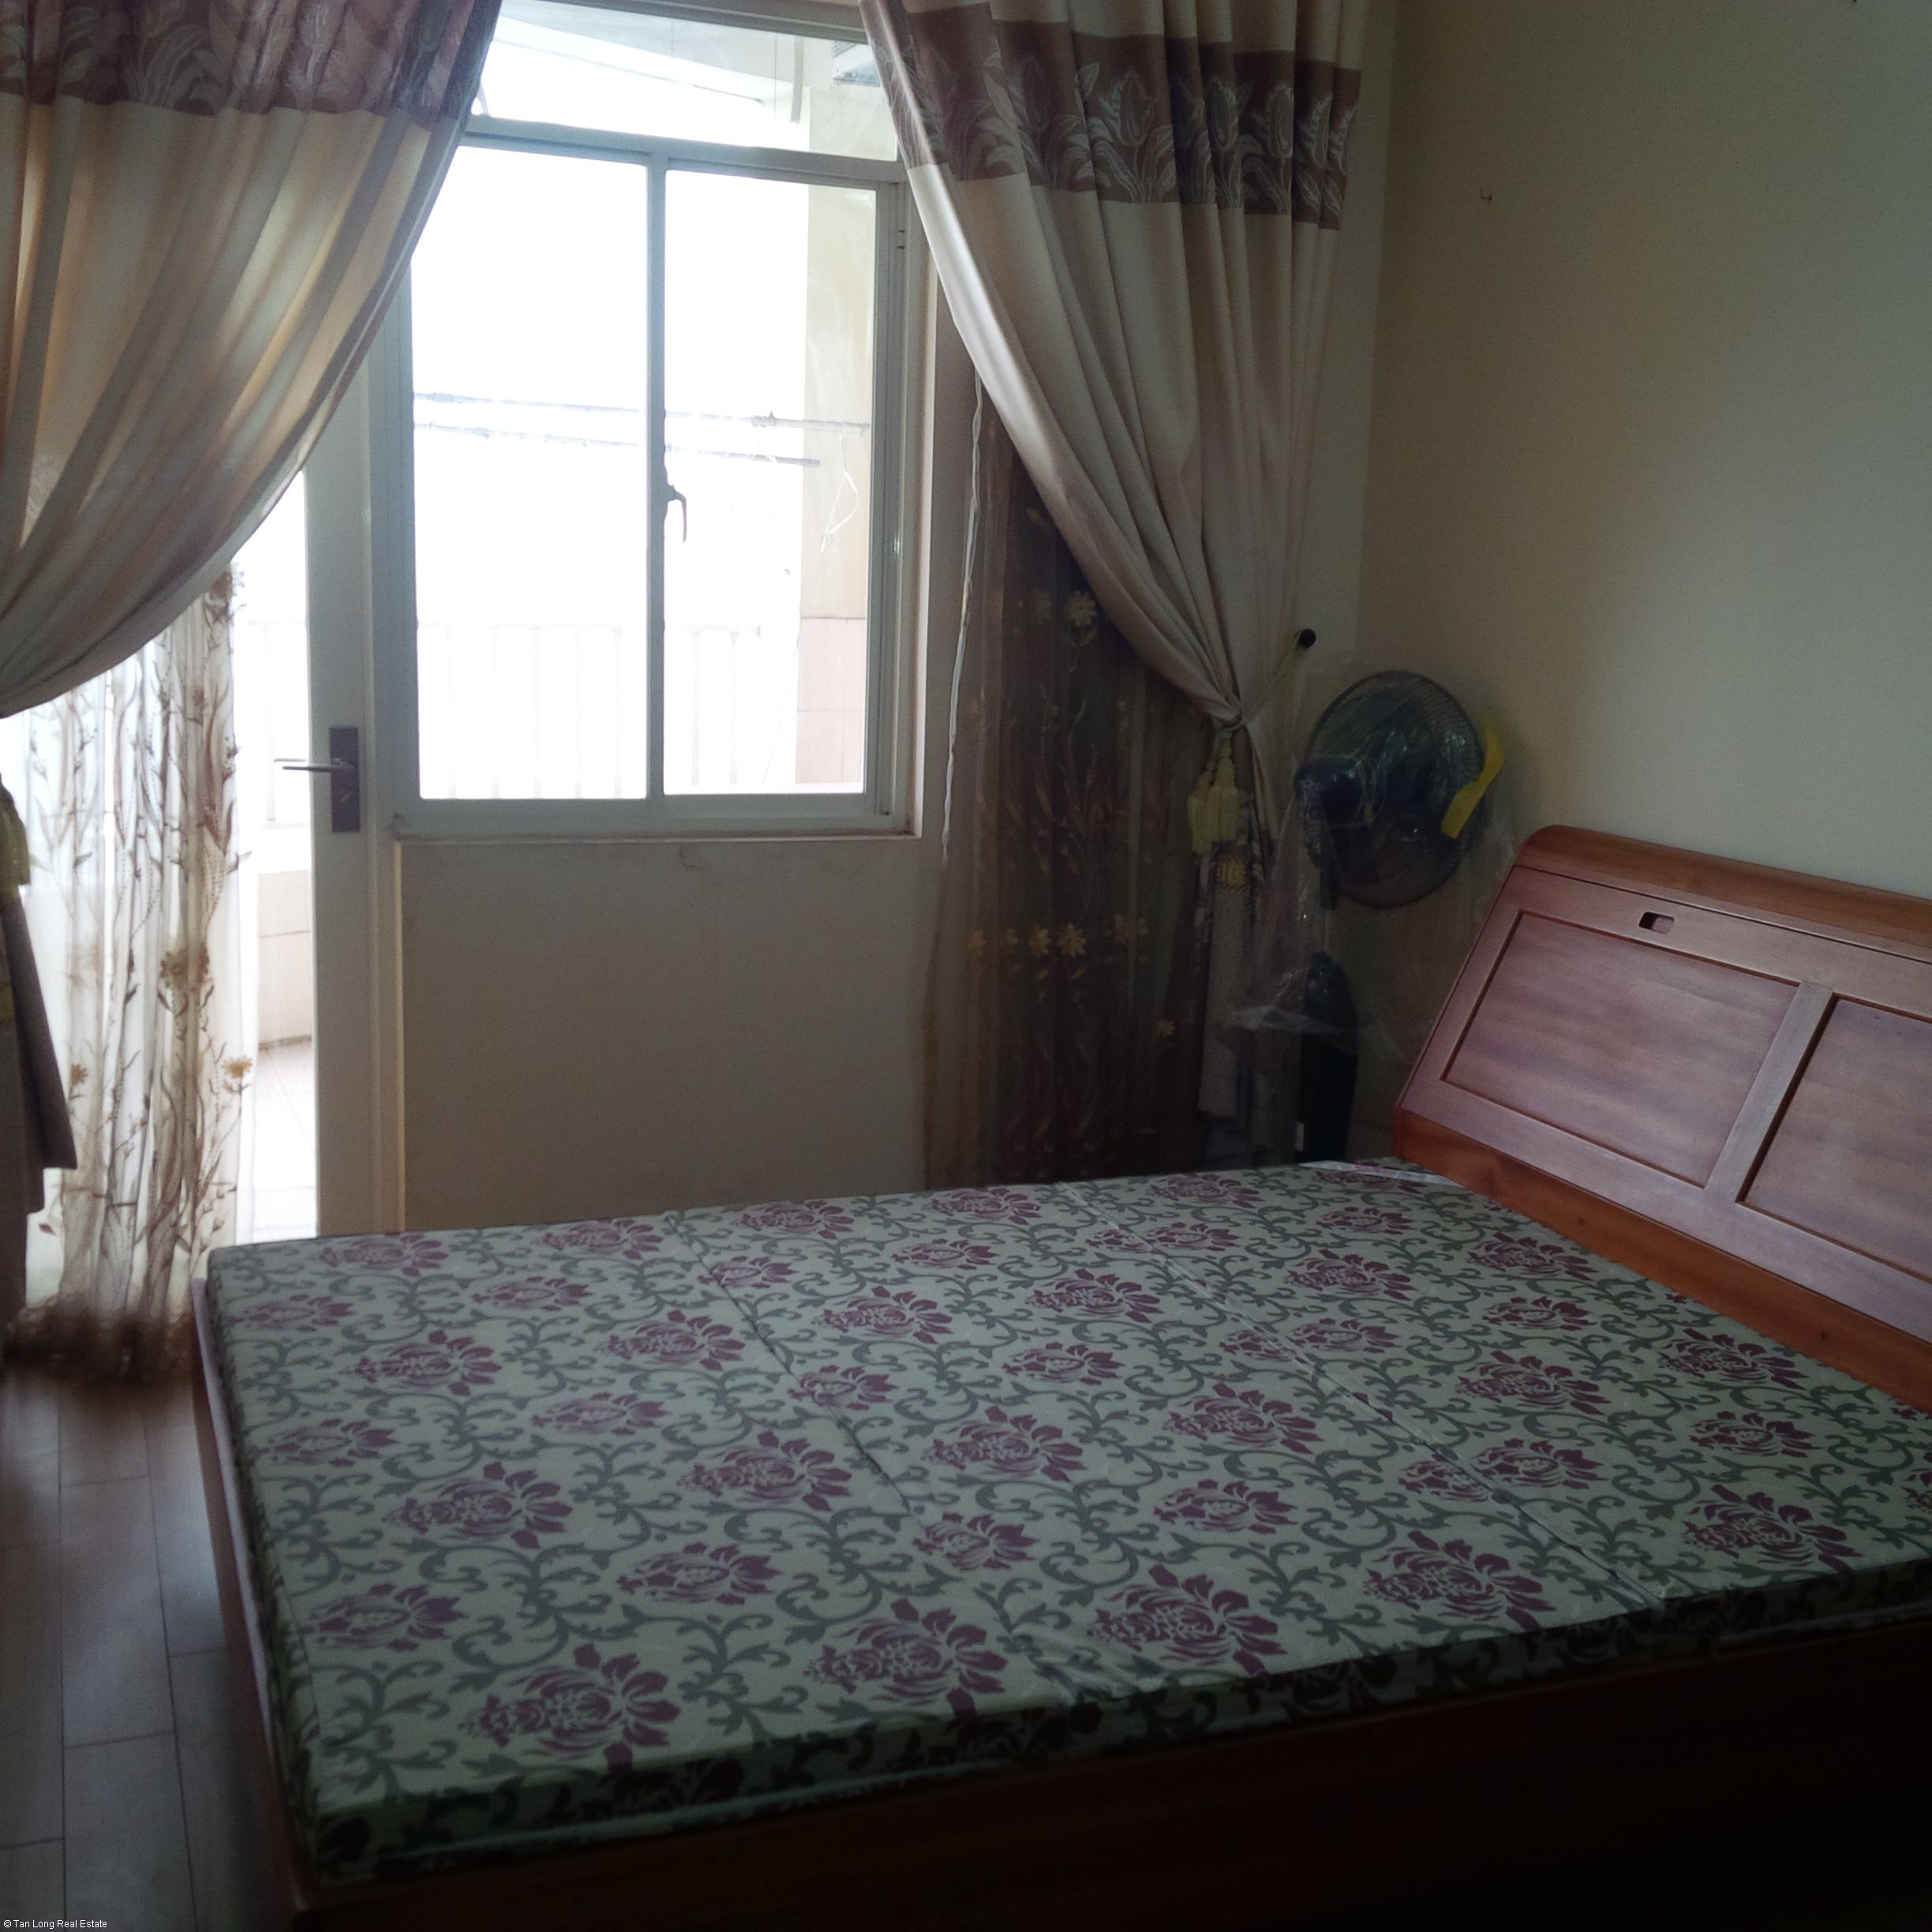 Sunrise apartment for rent in Tran Thai Tong, Cau Giay district. 2